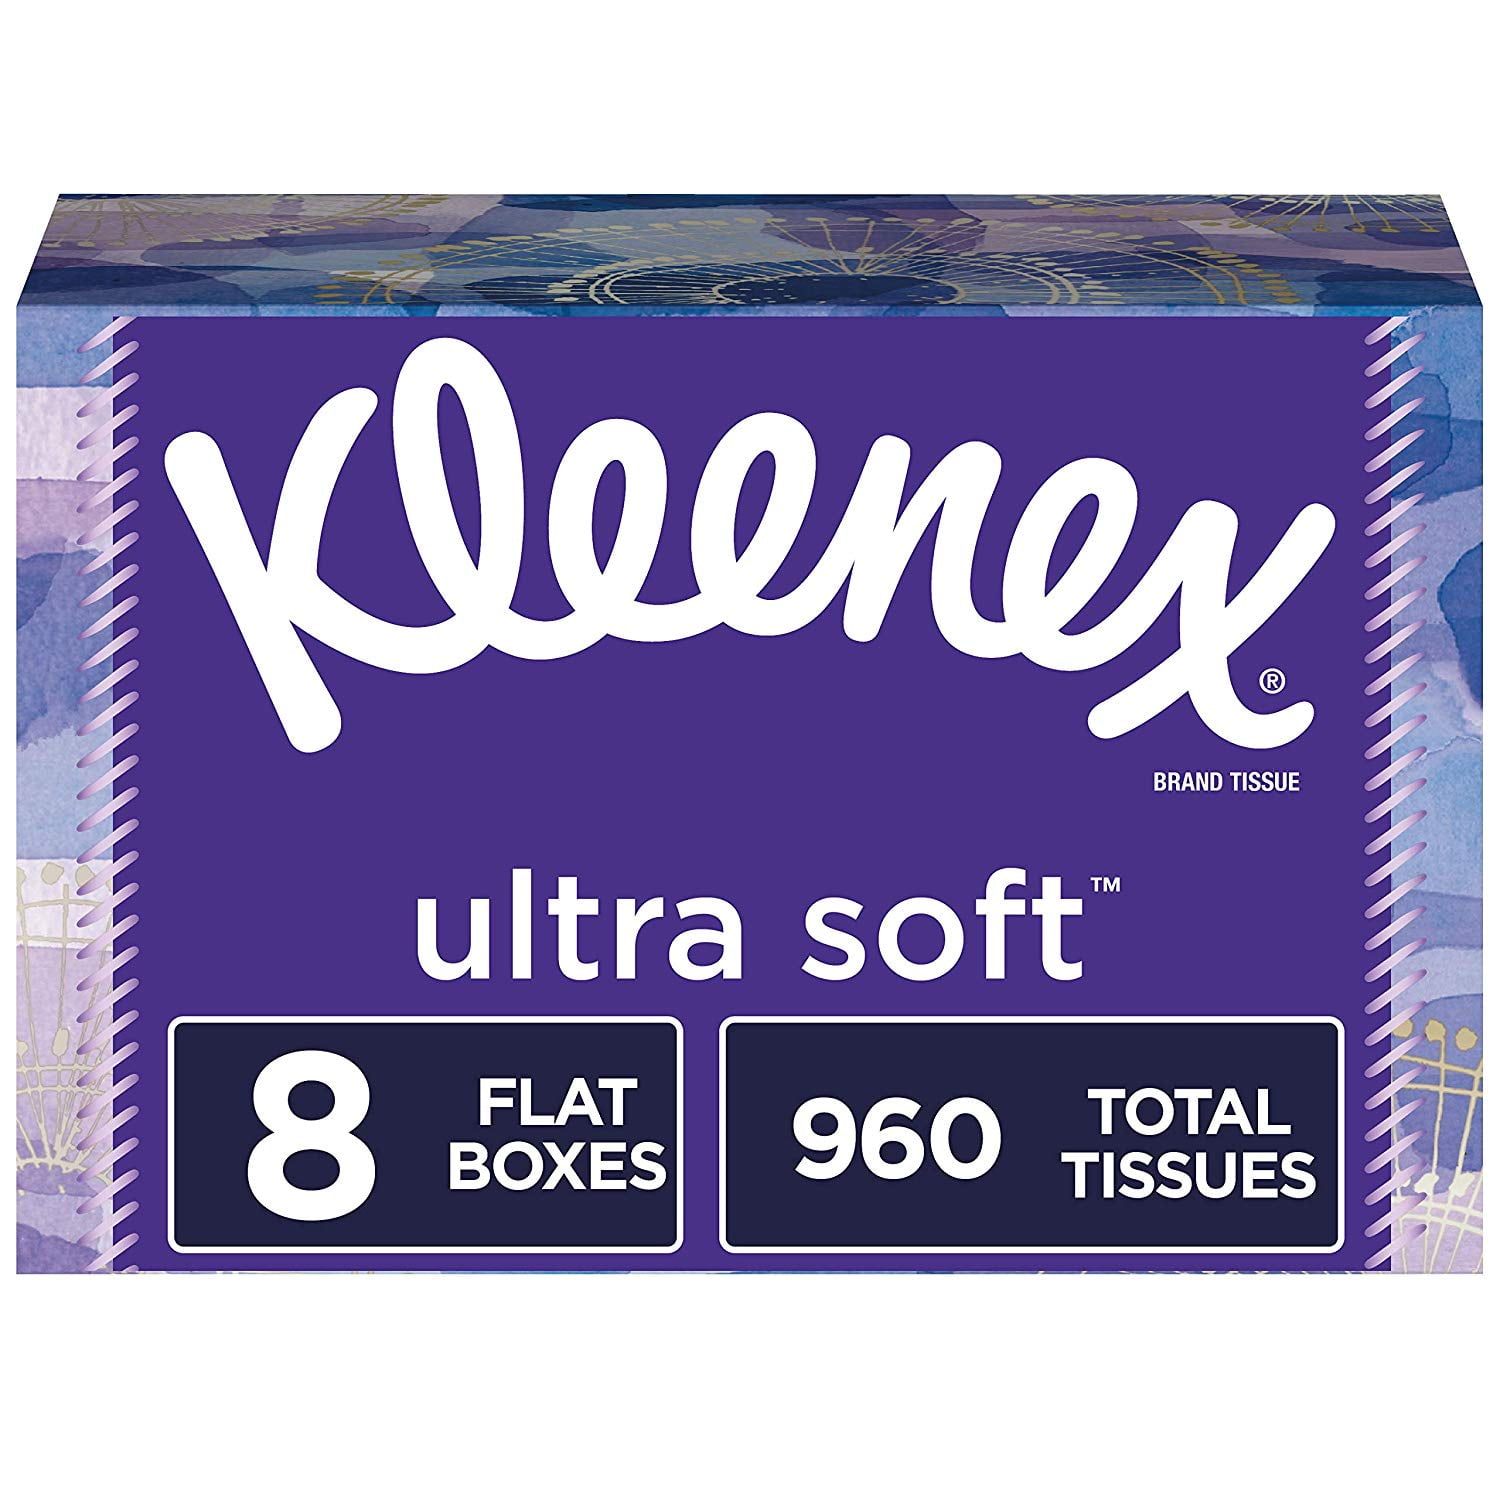 520 Tissues Total Kleenex Expressions Ultra Soft Facial Tissues 8 Cube Boxes 65 Tissues per Box 